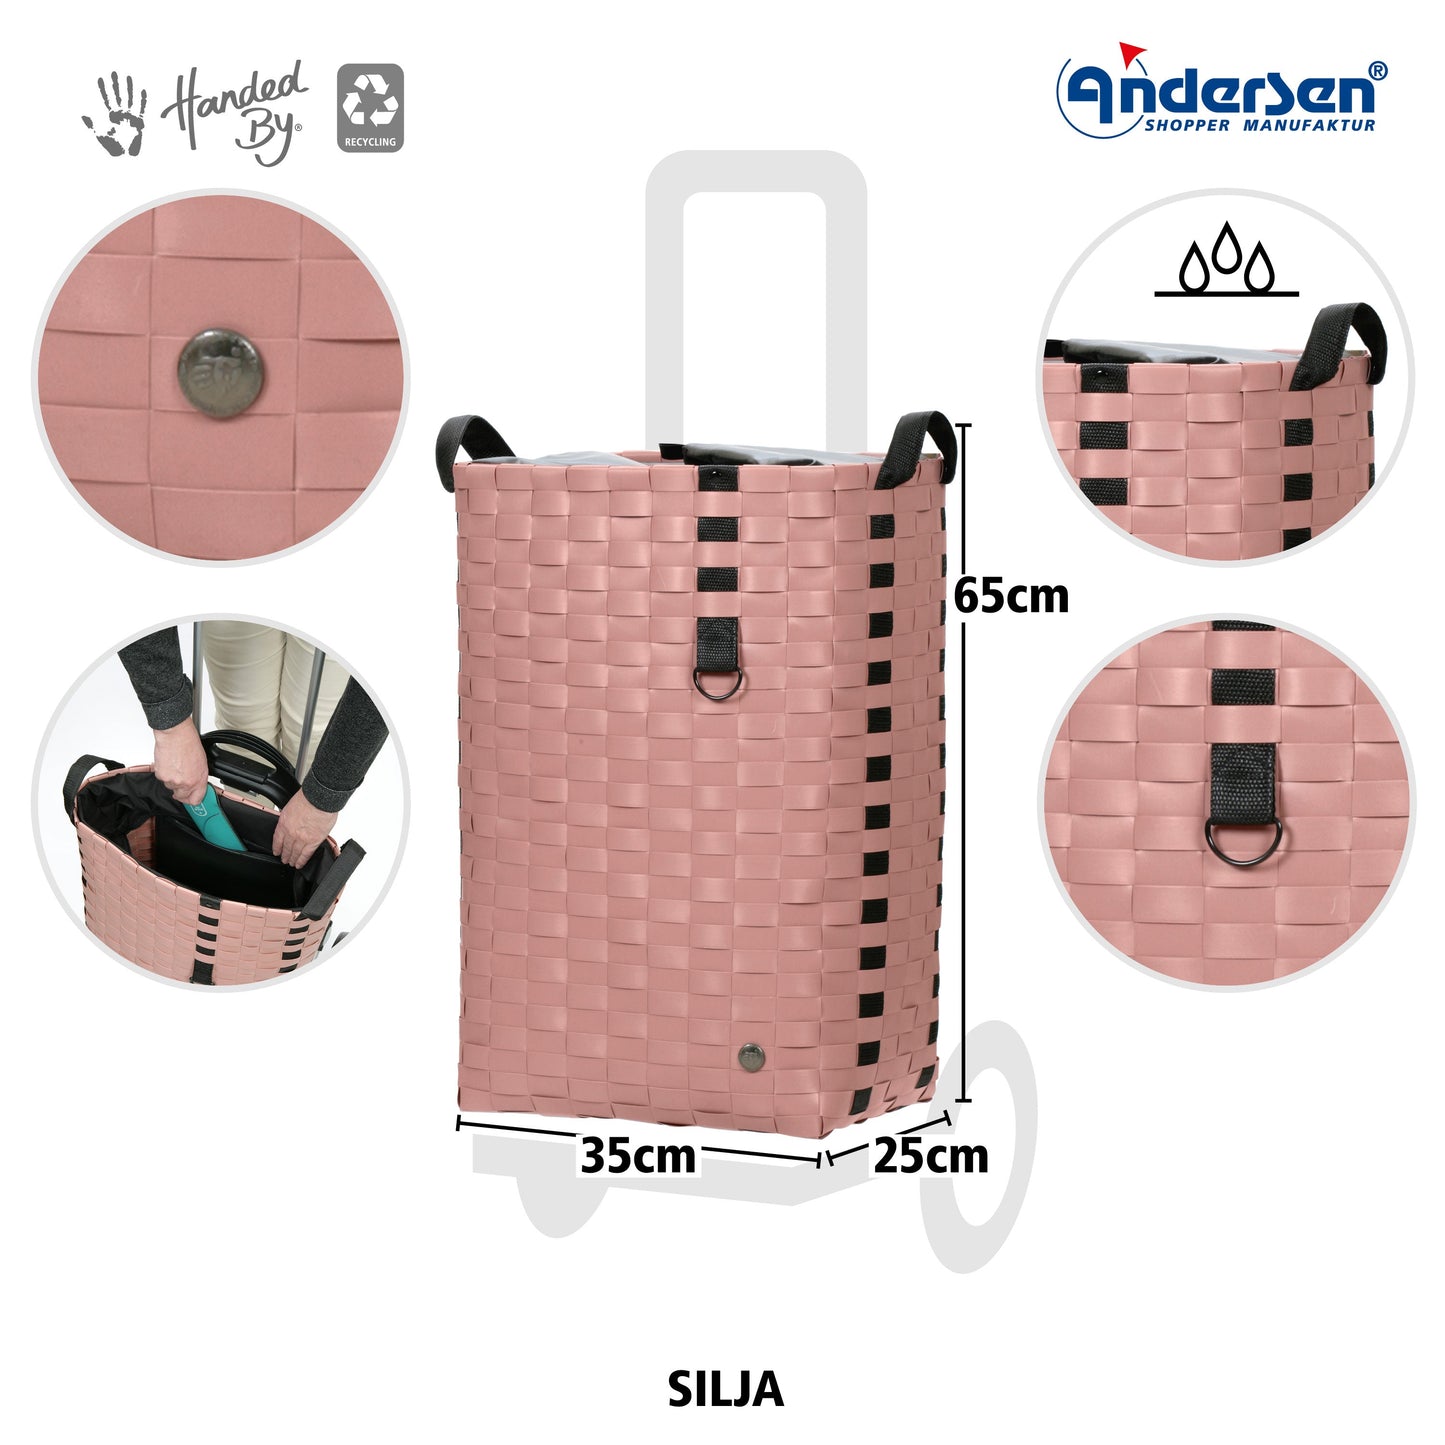 Andersen Shopper Manufaktur-Alu Star Shopper Silja terra pink-www.shopping-trolley.ch-bild3